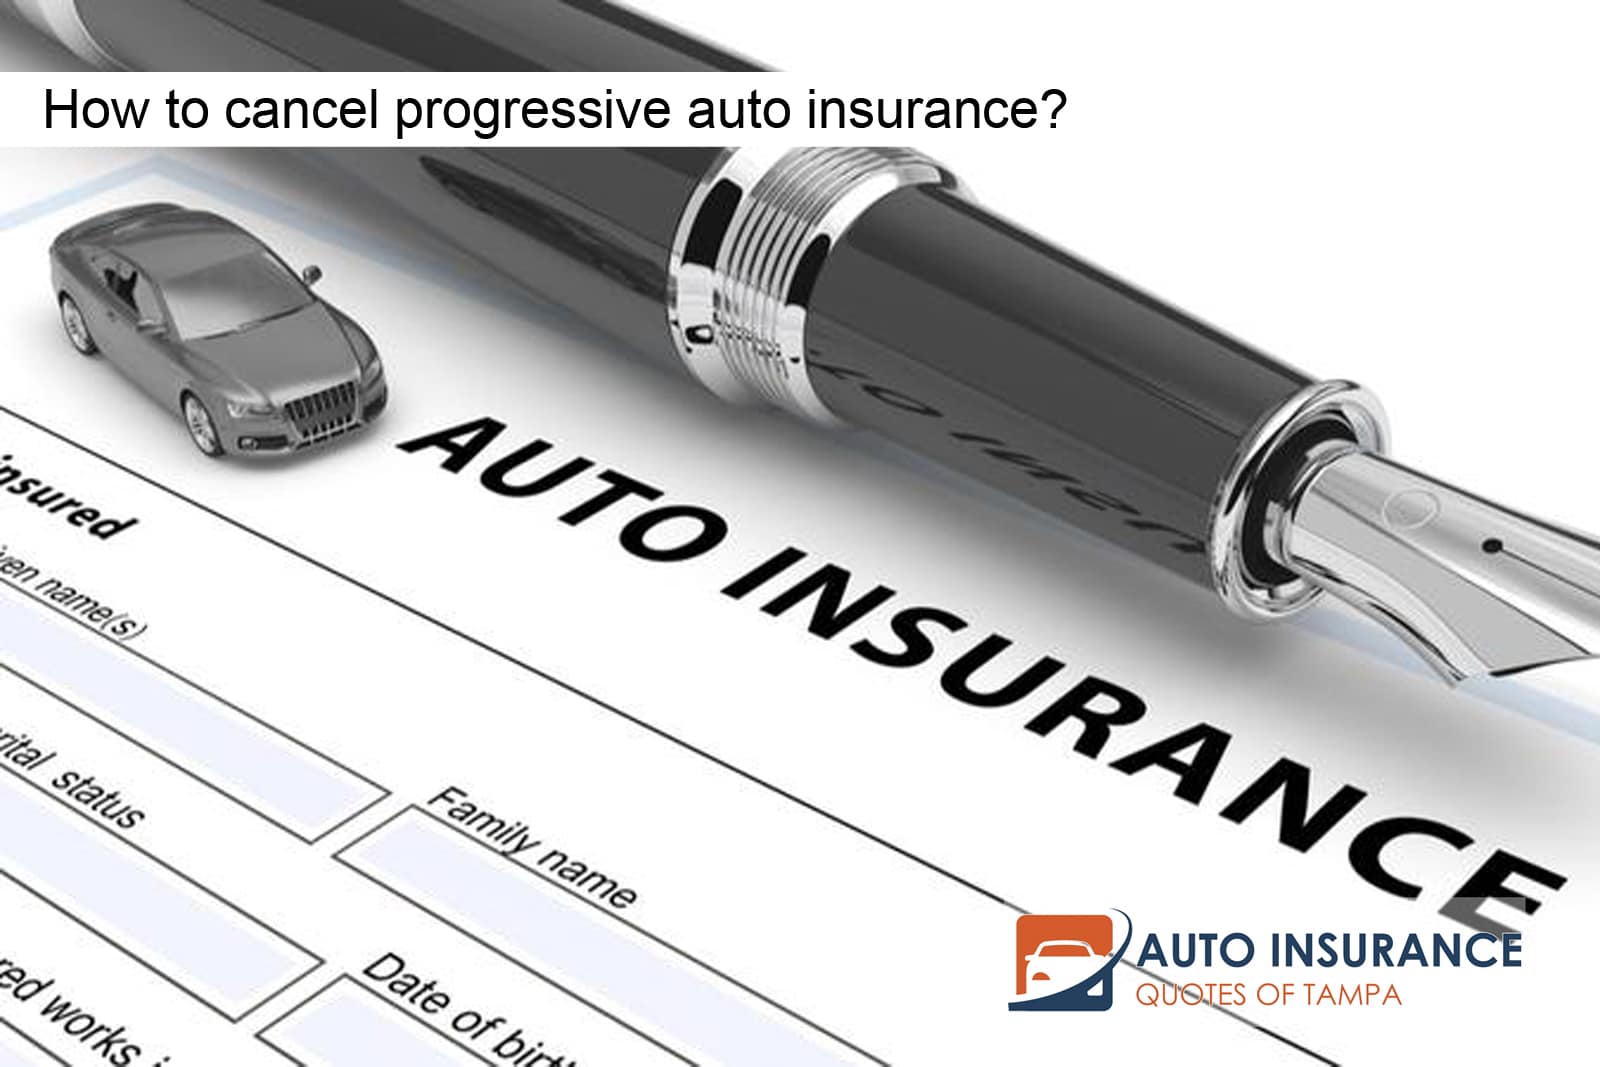 How to cancel progressive auto insurance?